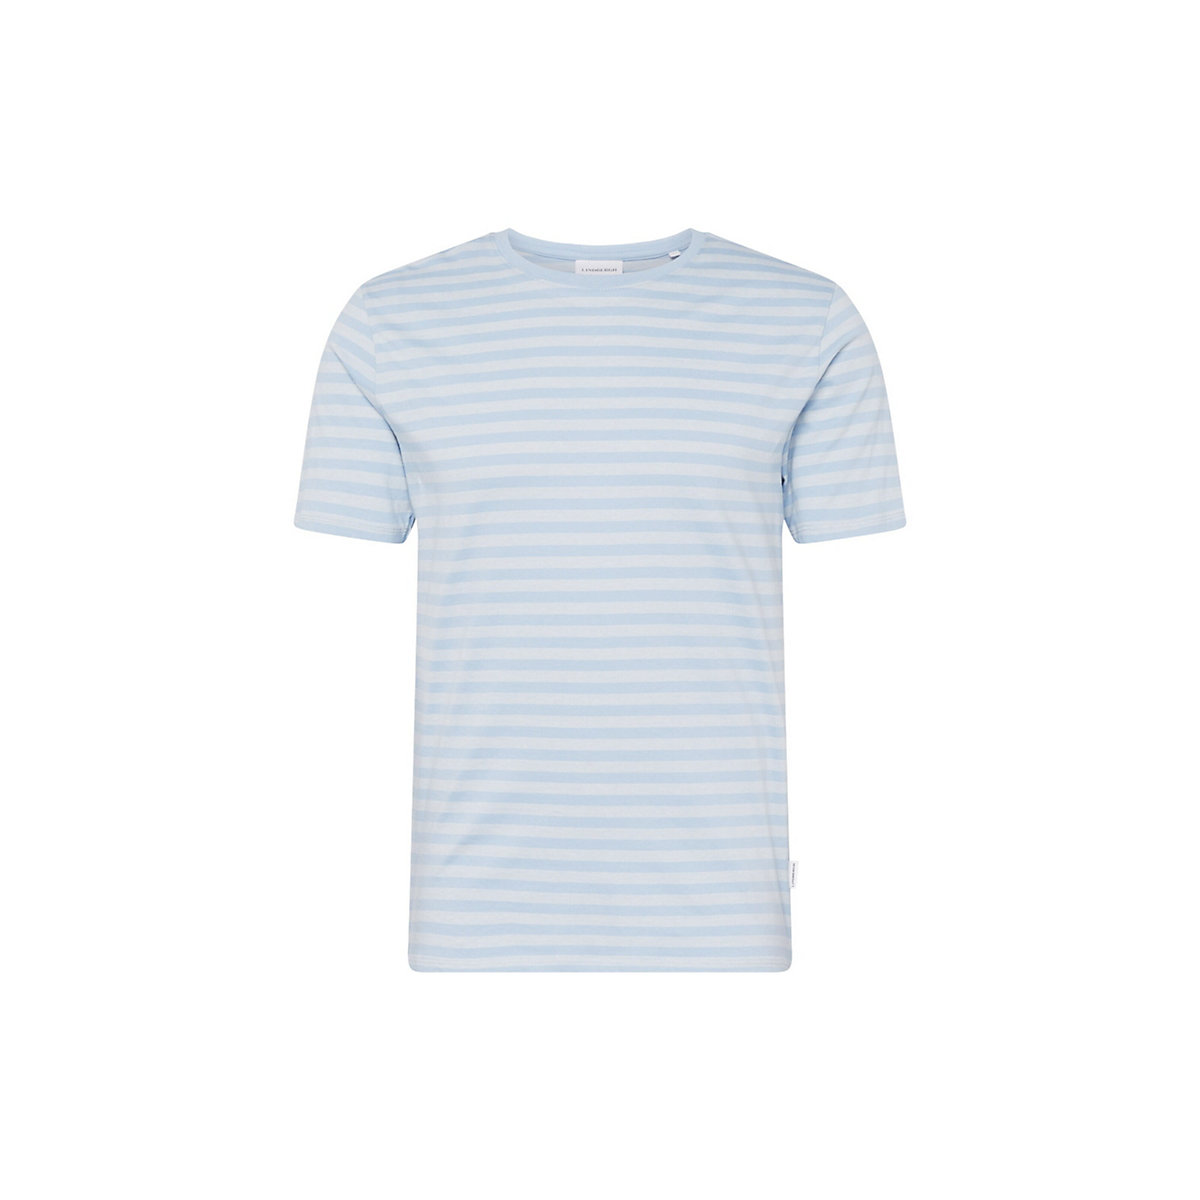 LINDBERGH Shirt blau/weiß